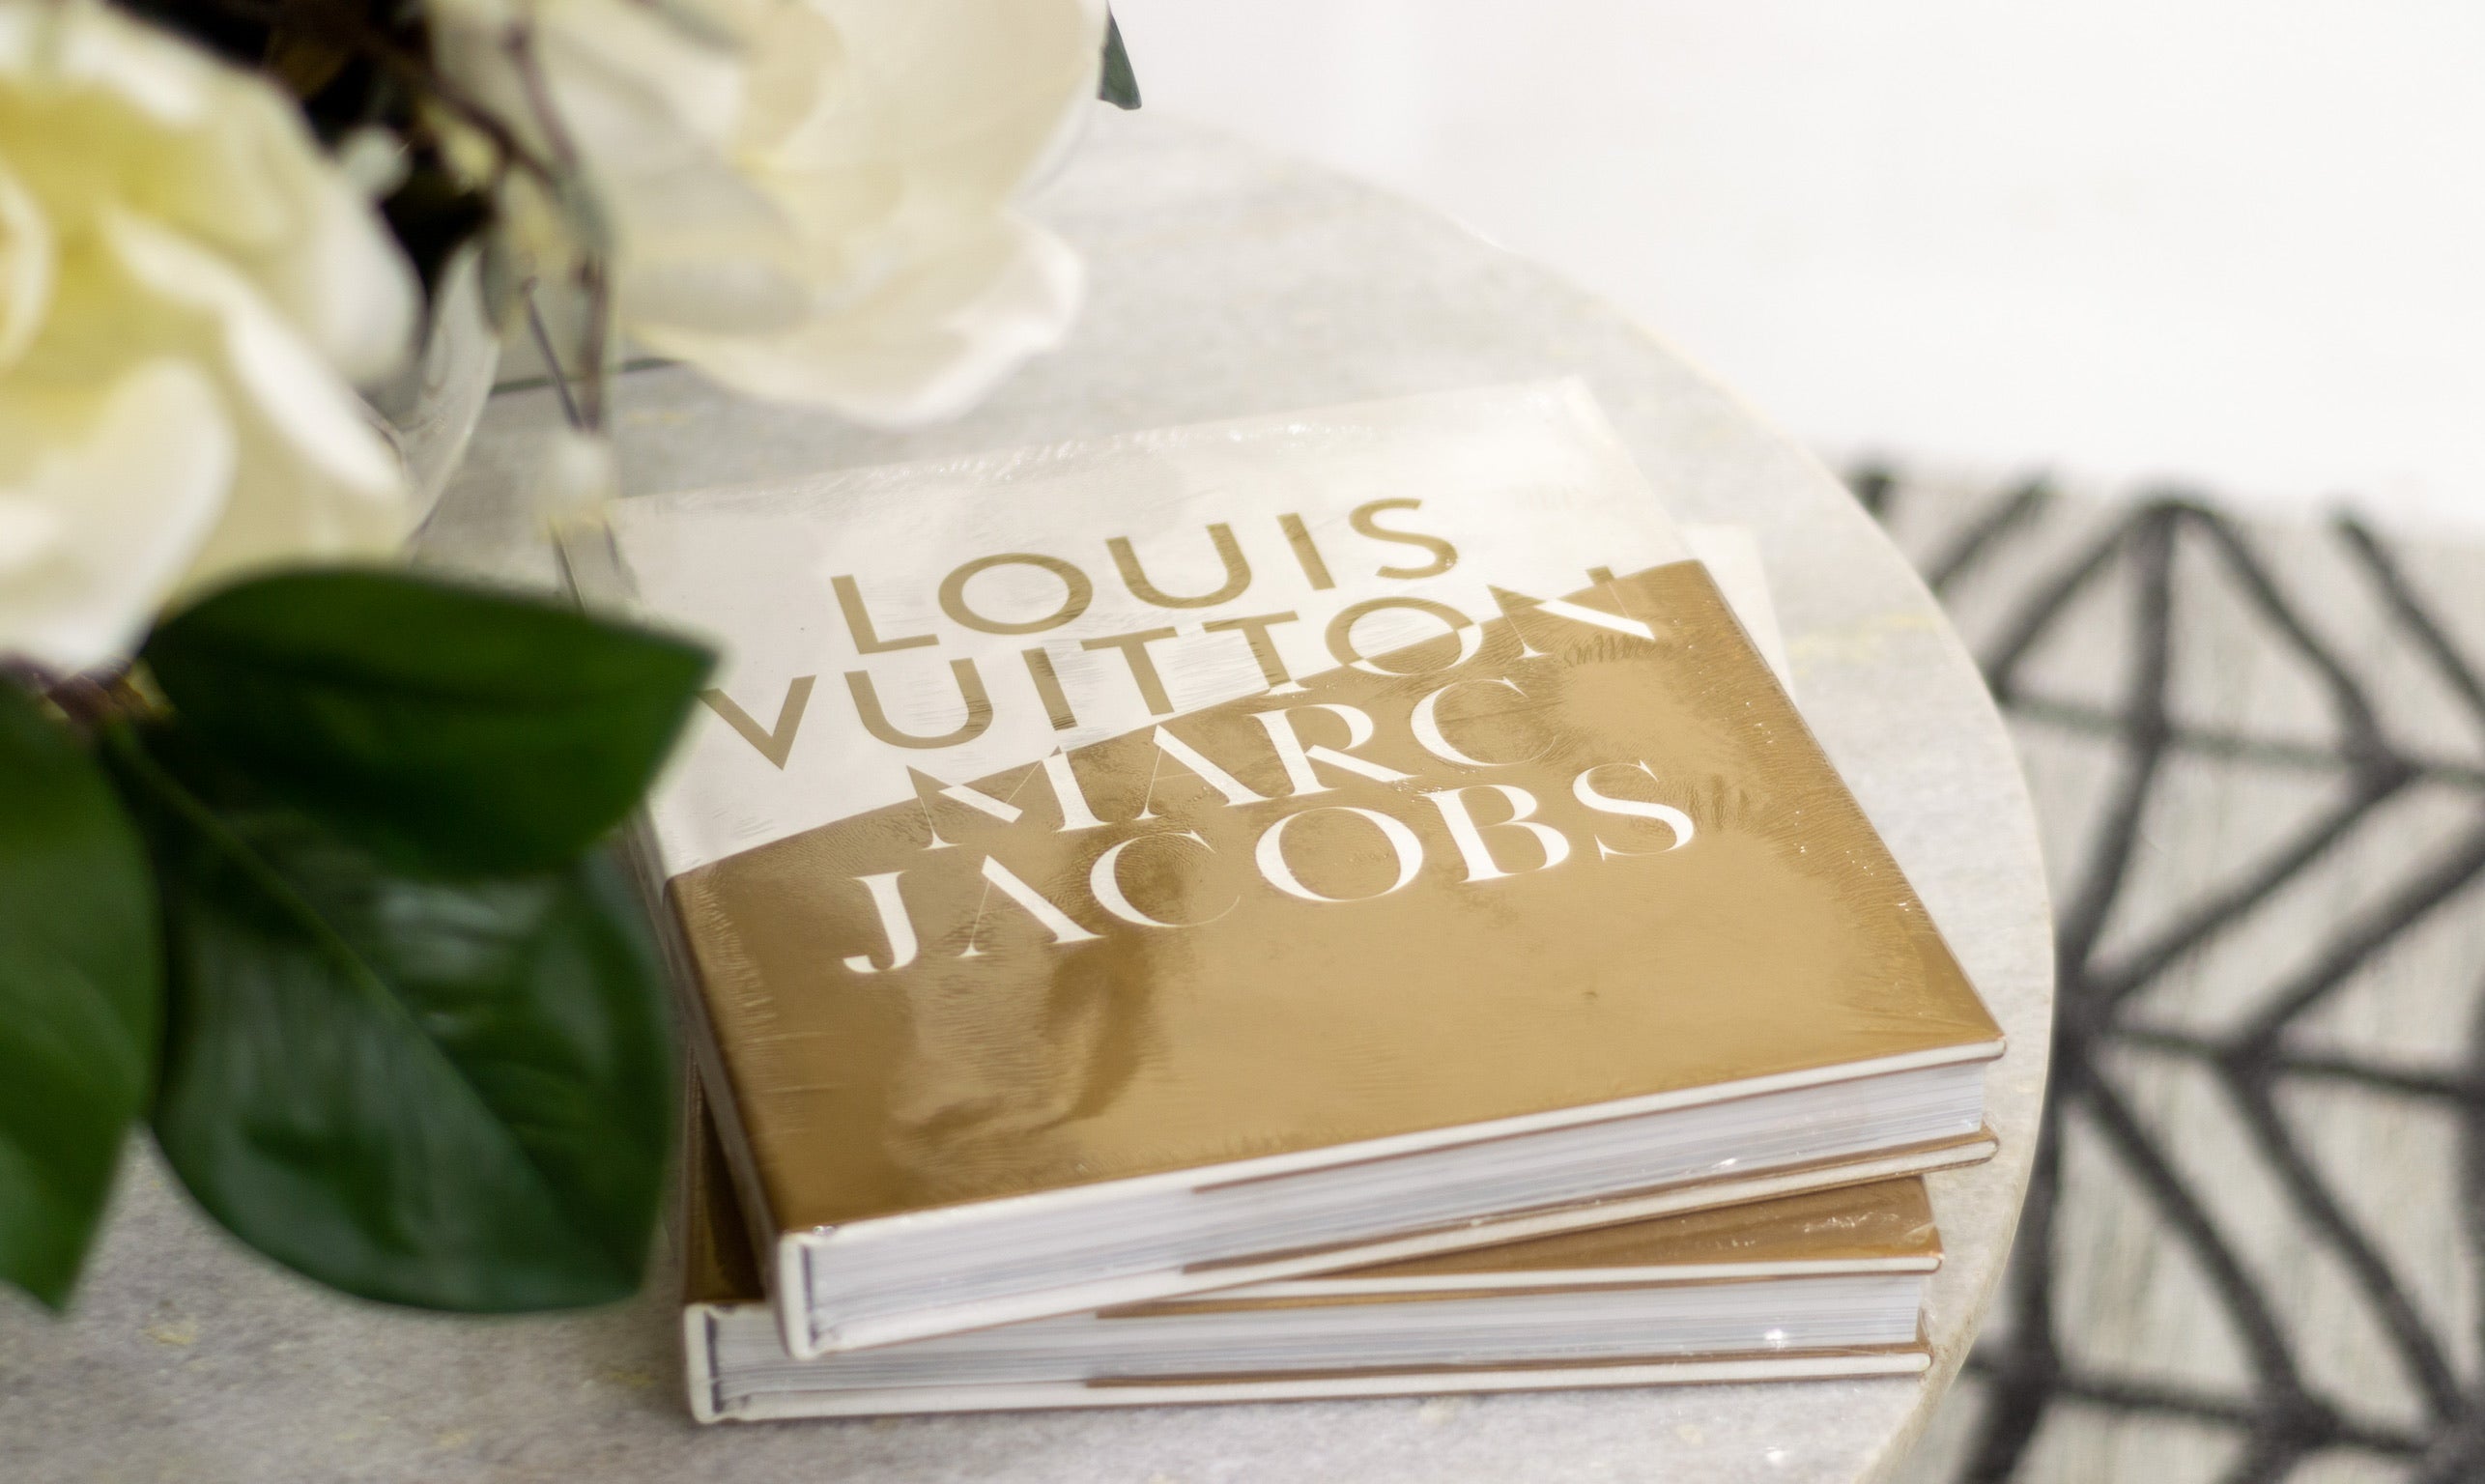 Louis Vuitton / Marc Jacobs Book